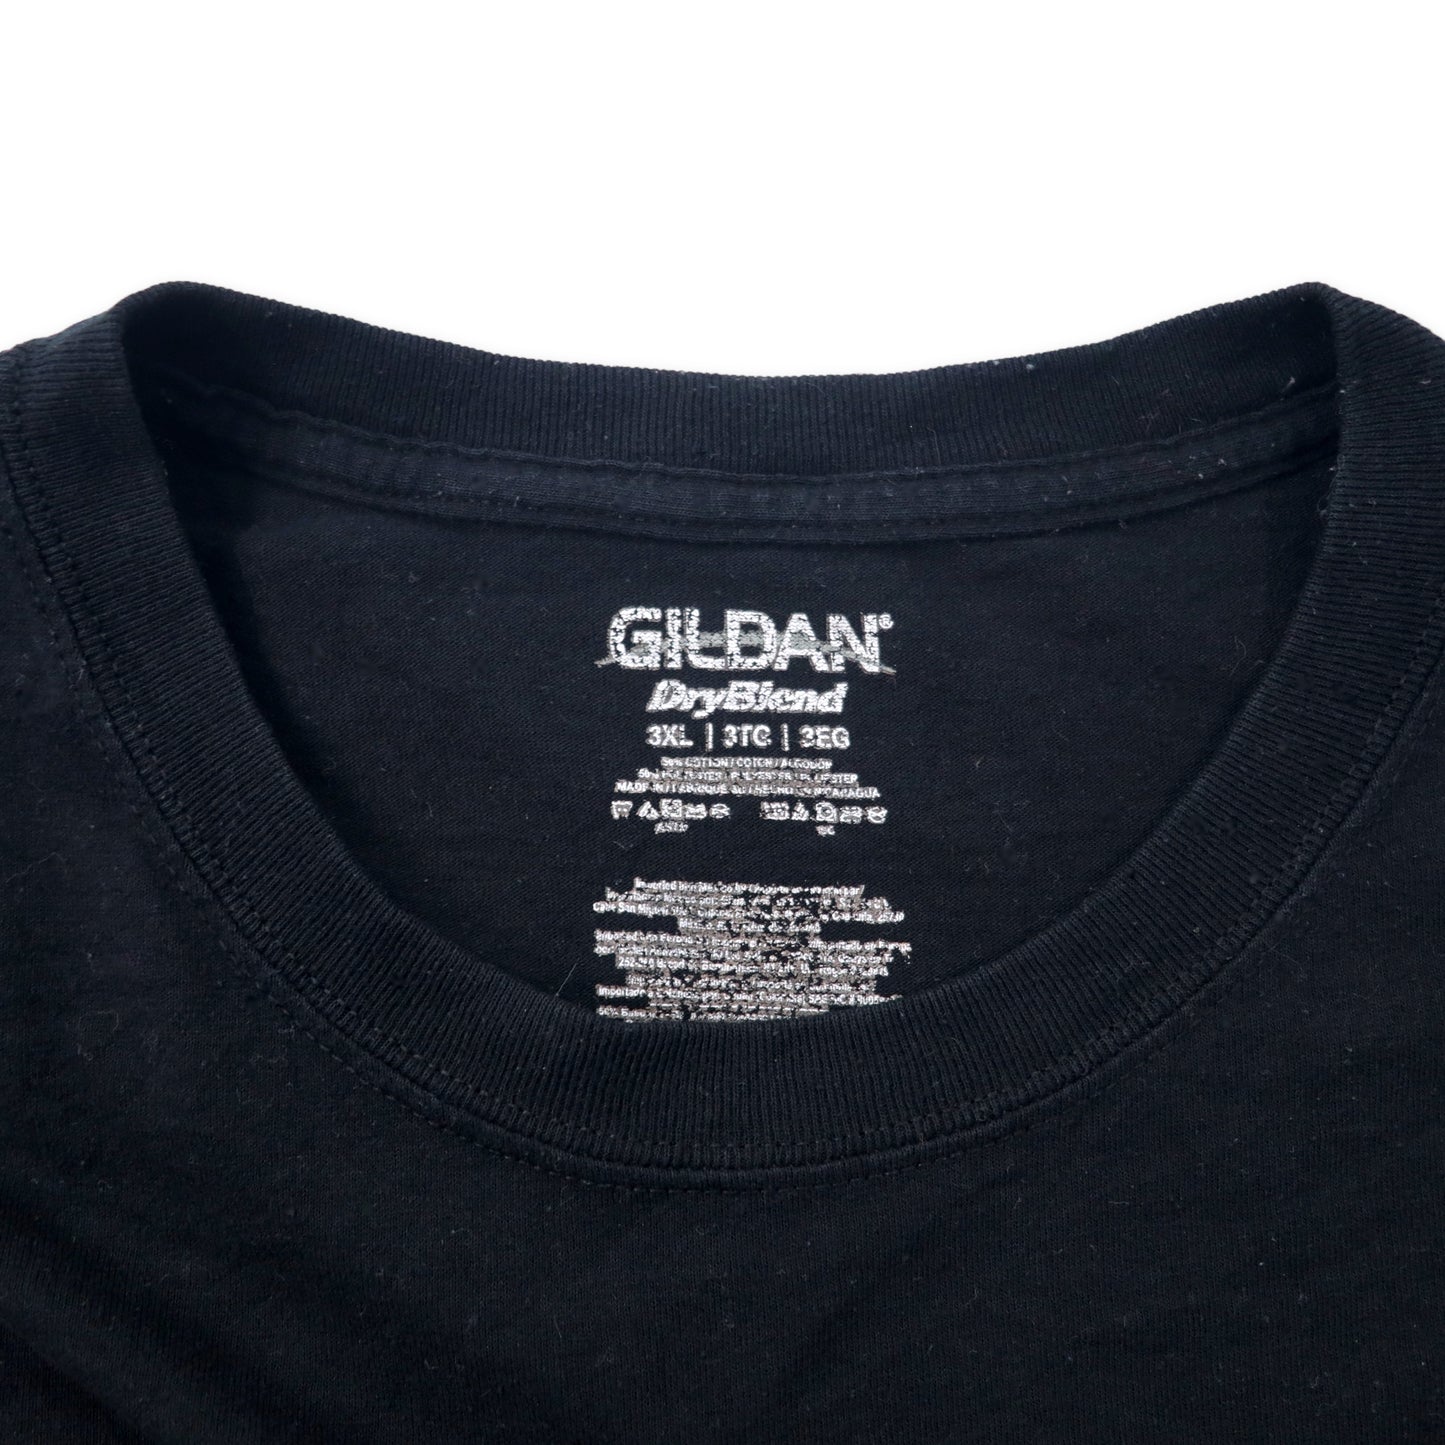 GILDAN プリントTシャツ 3XL ブラック コットン FORT WAYNE Komets ビッグサイズ